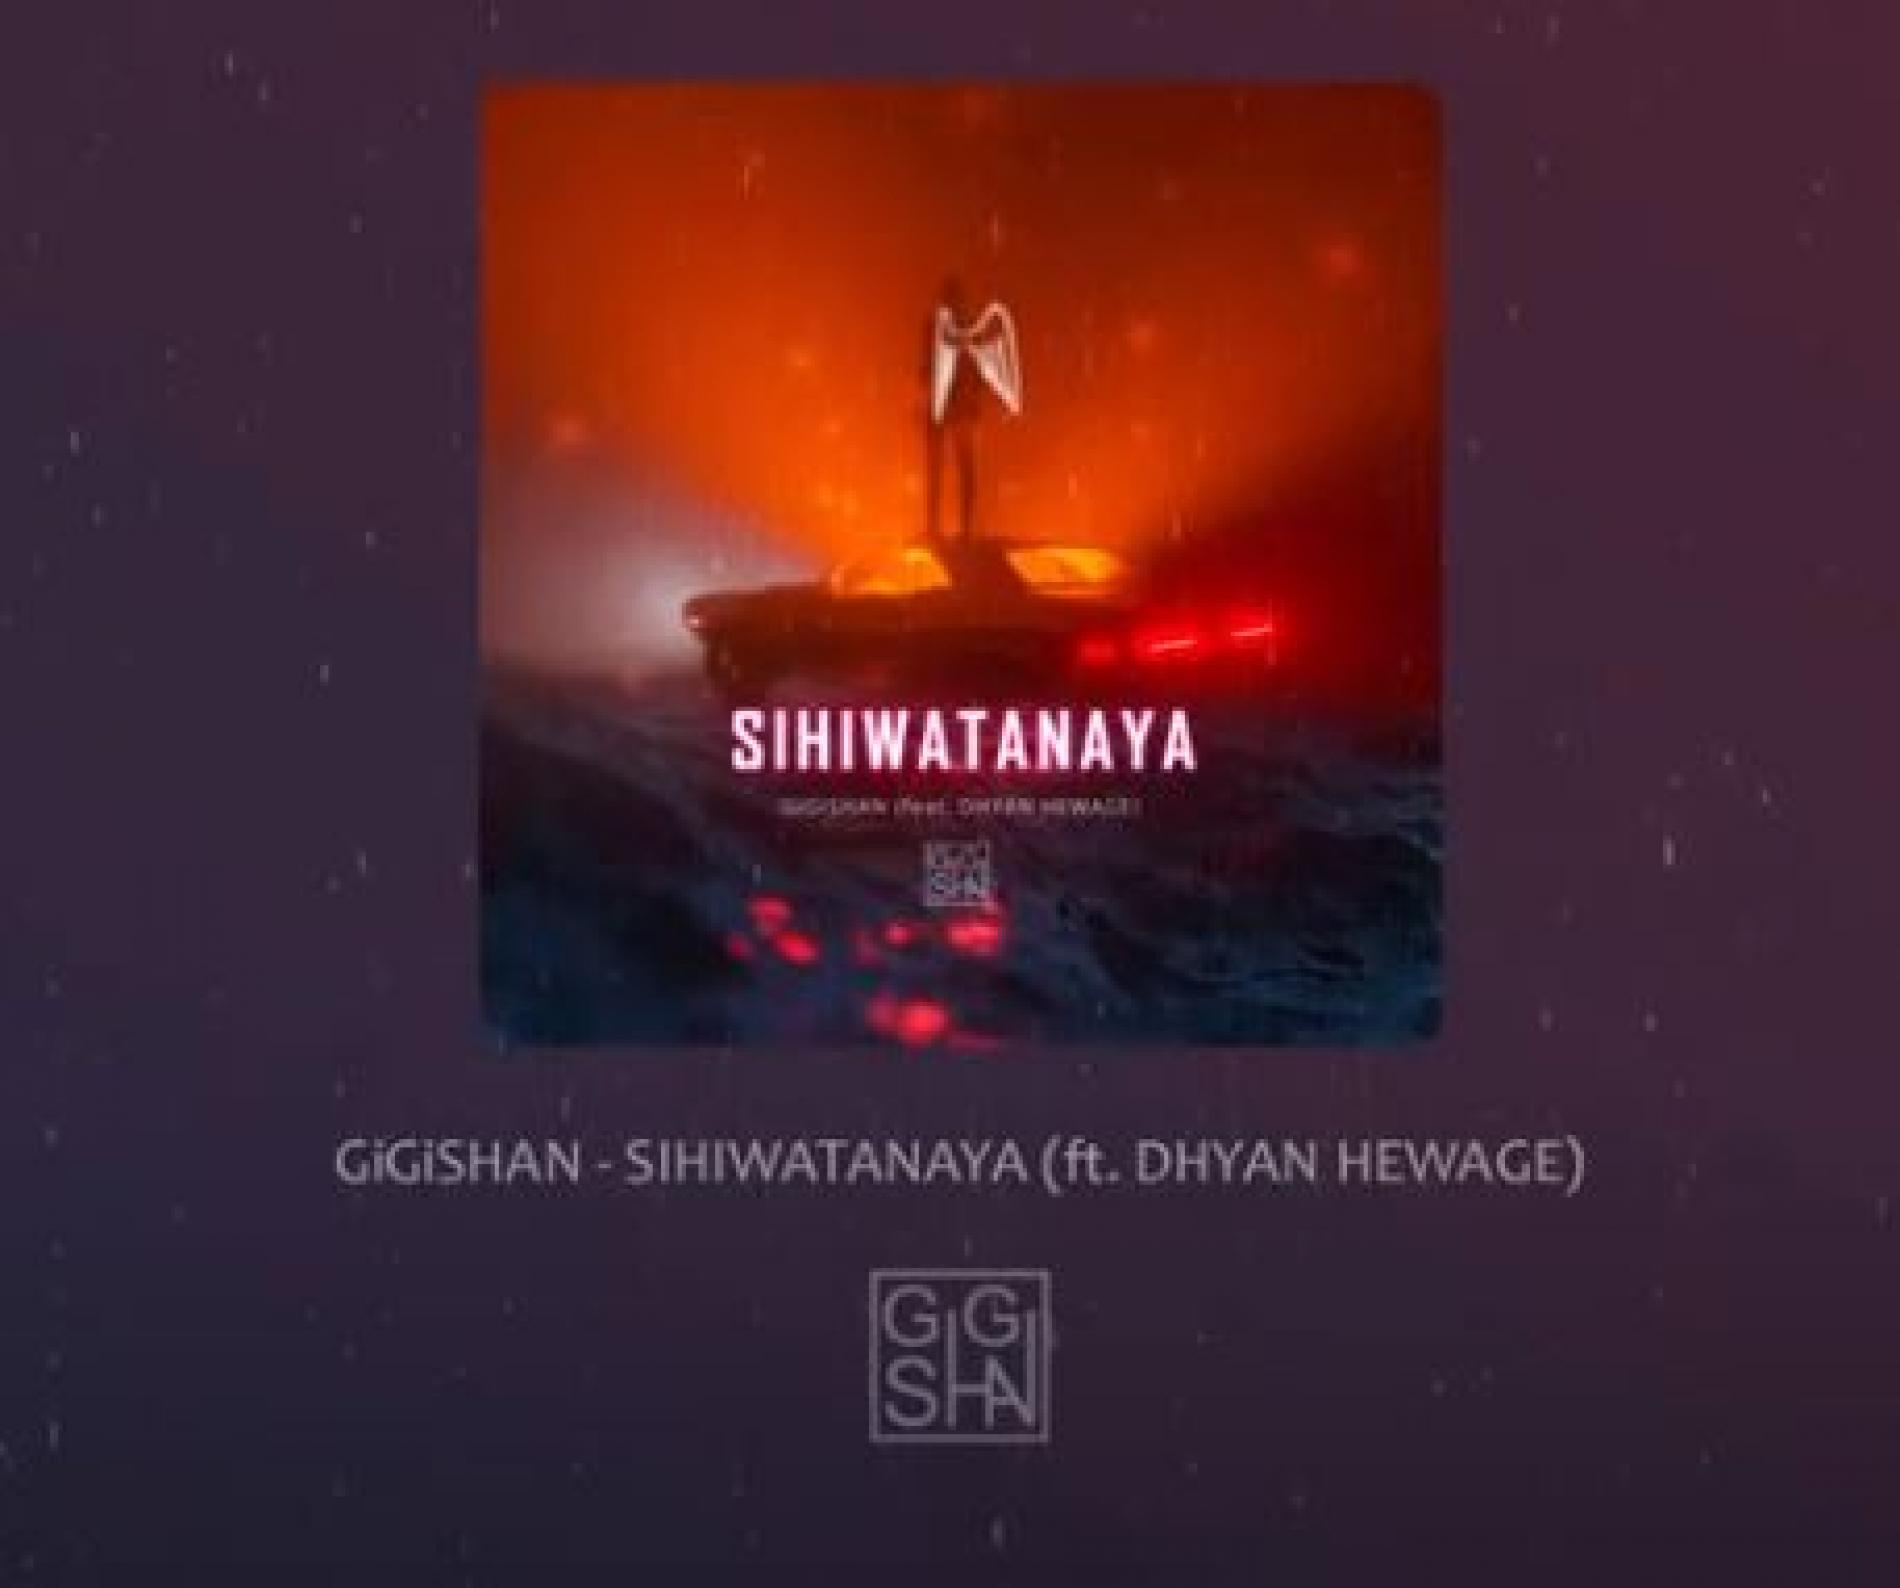 New Music : GiGiSHAN – SIHIWATANAYA (feat Dhyan Hewage) [Official Audio]